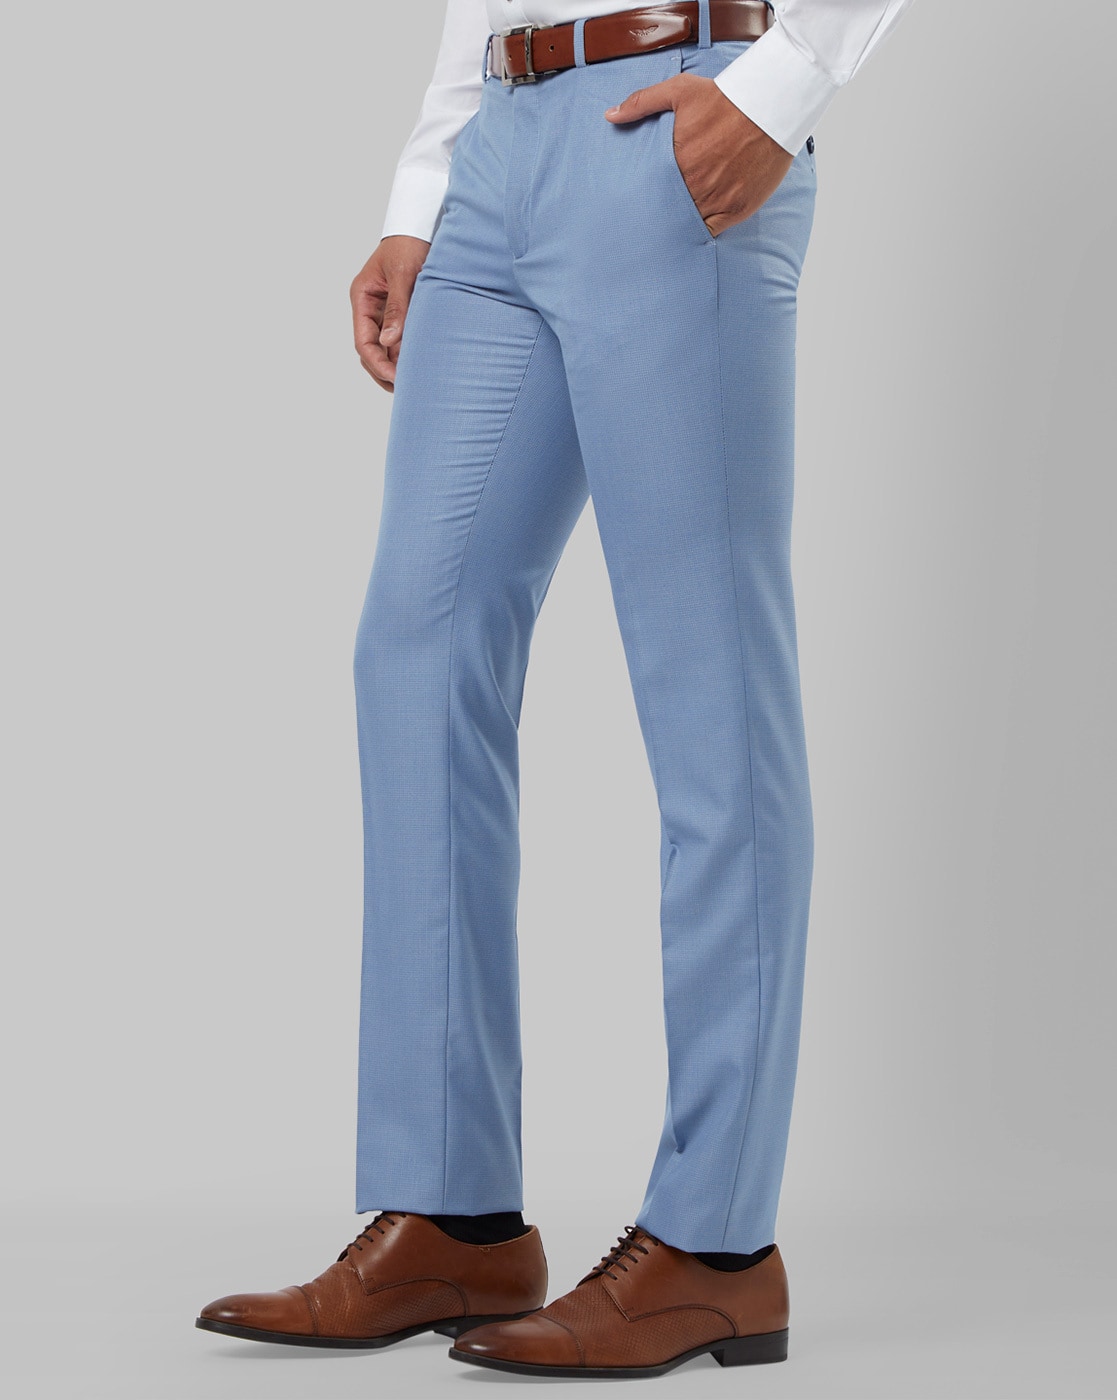 Khaki Off White Men Formal Trousers Raymond American Elm - Buy Khaki Off  White Men Formal Trousers Raymond American Elm online in India